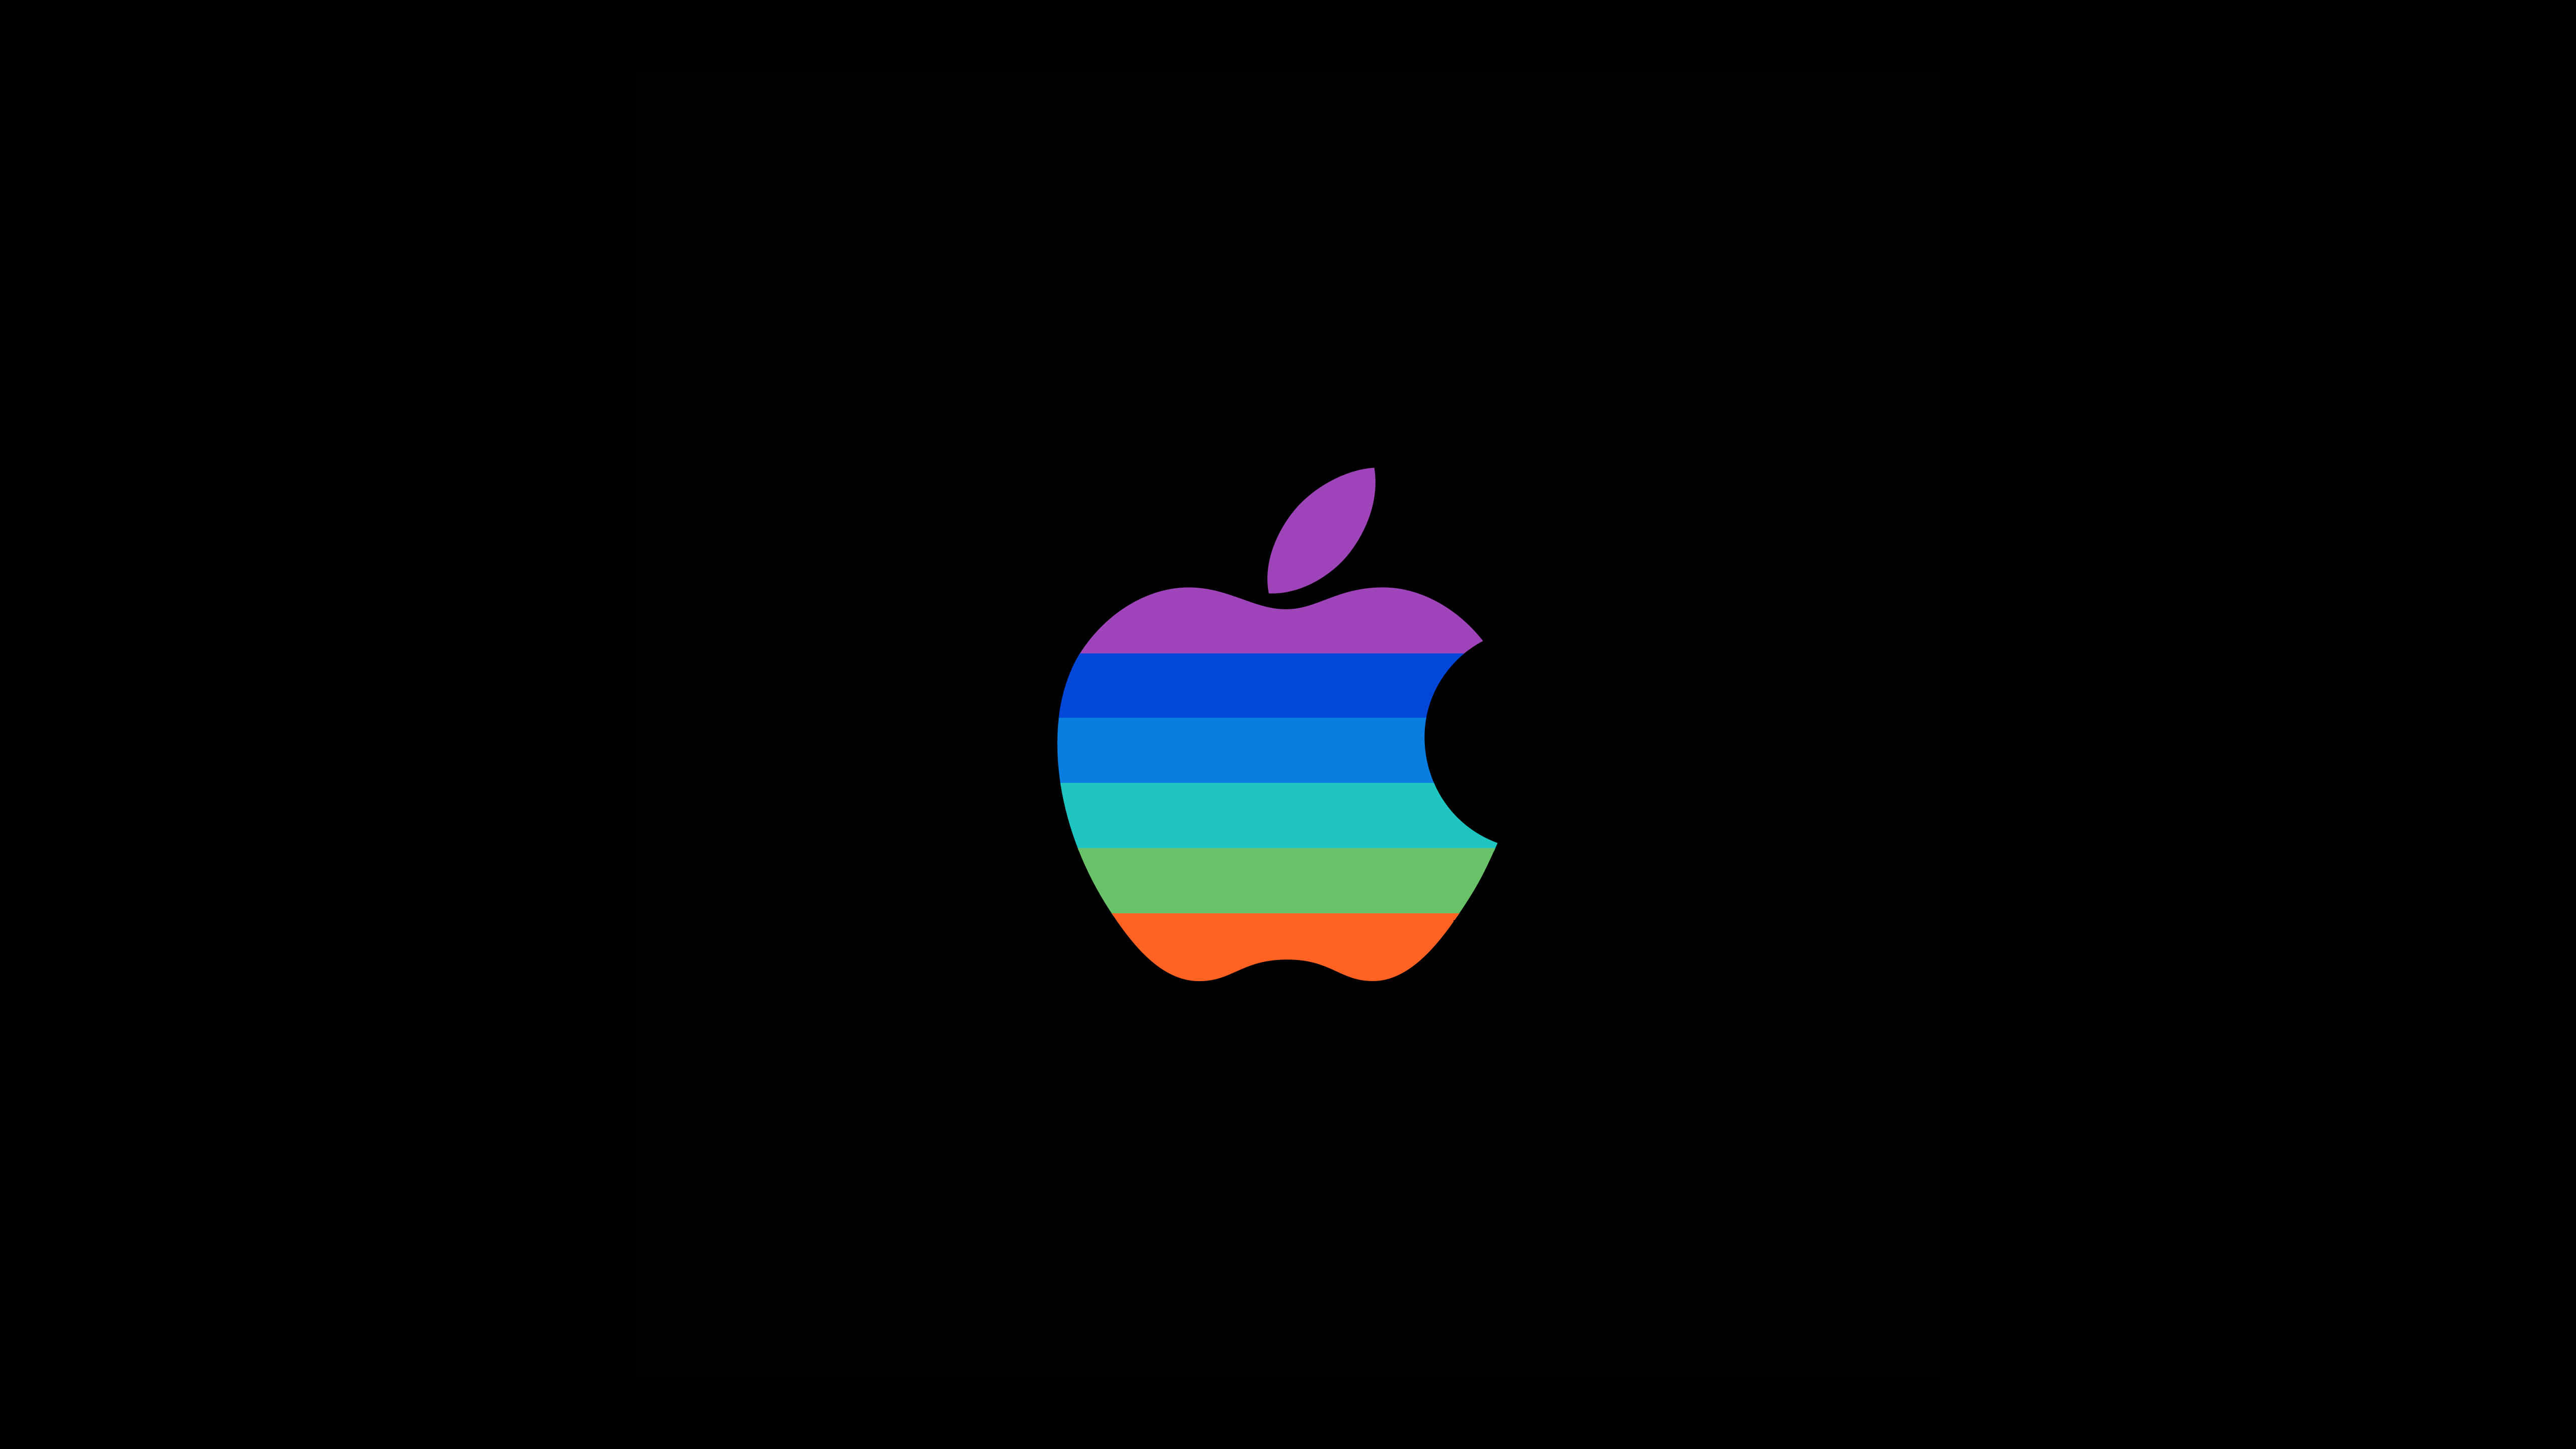 Apple Logo Colorful Black Cool Wallpaper Sc Desktop